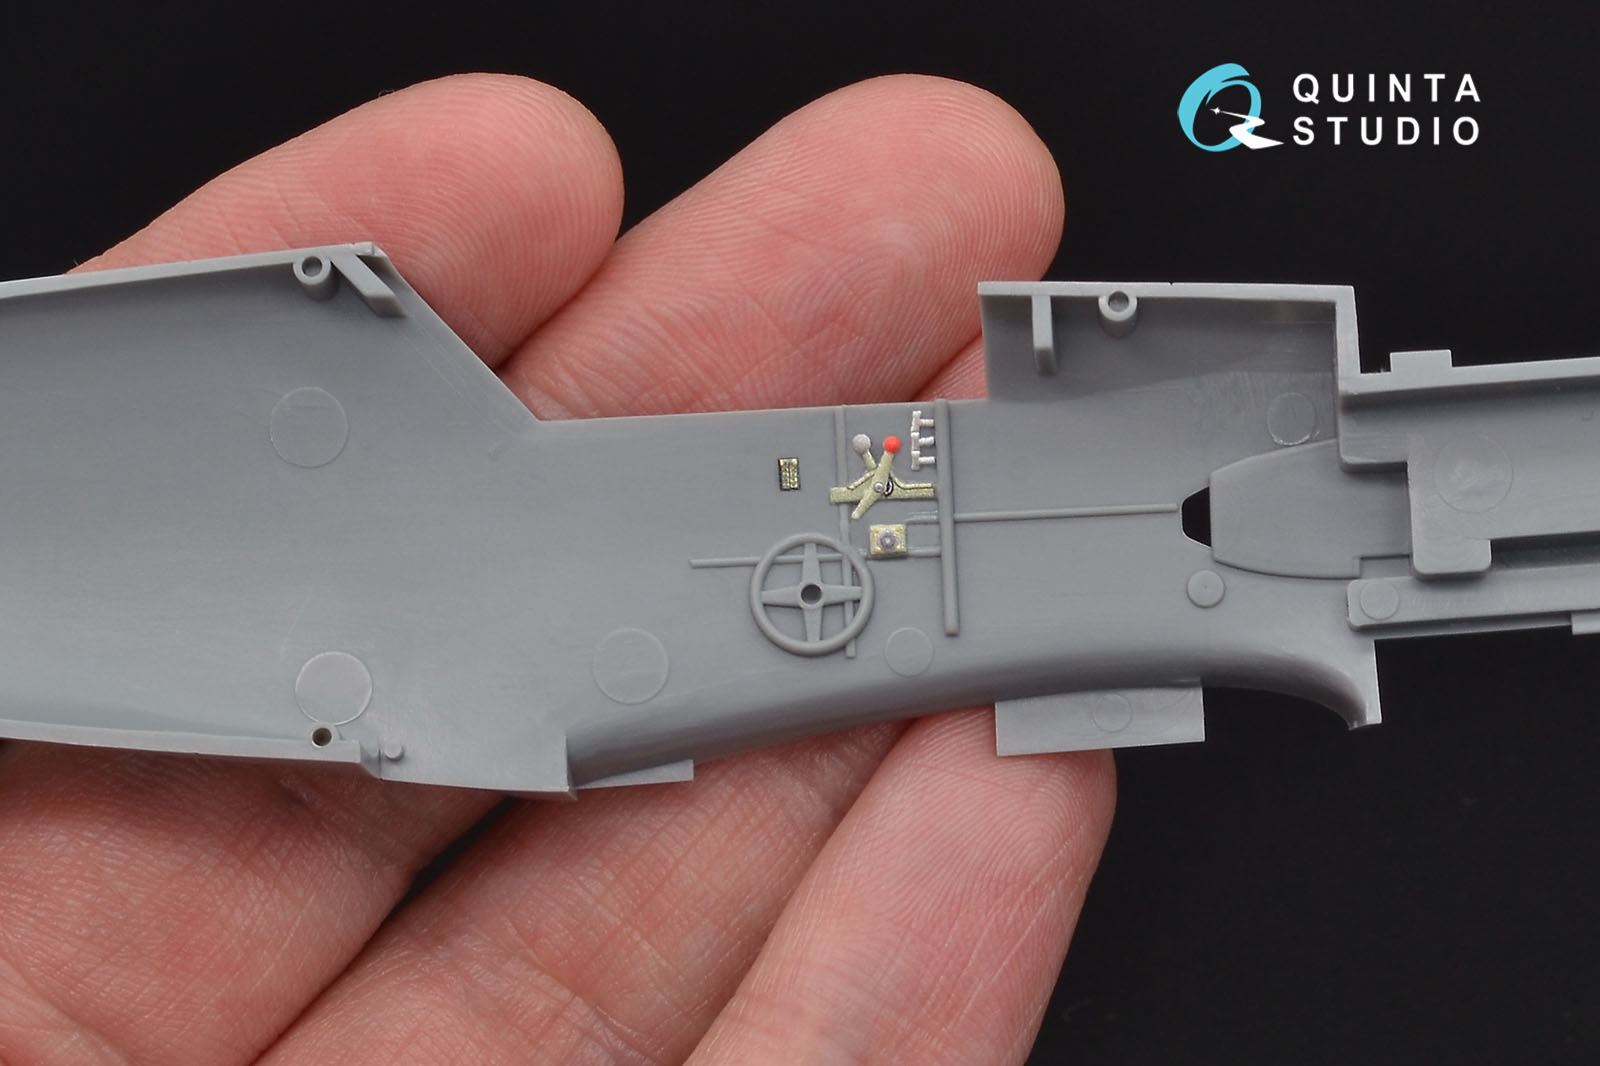 3D Декаль интерьера кабины Bf 109E (для модели Tamiya)